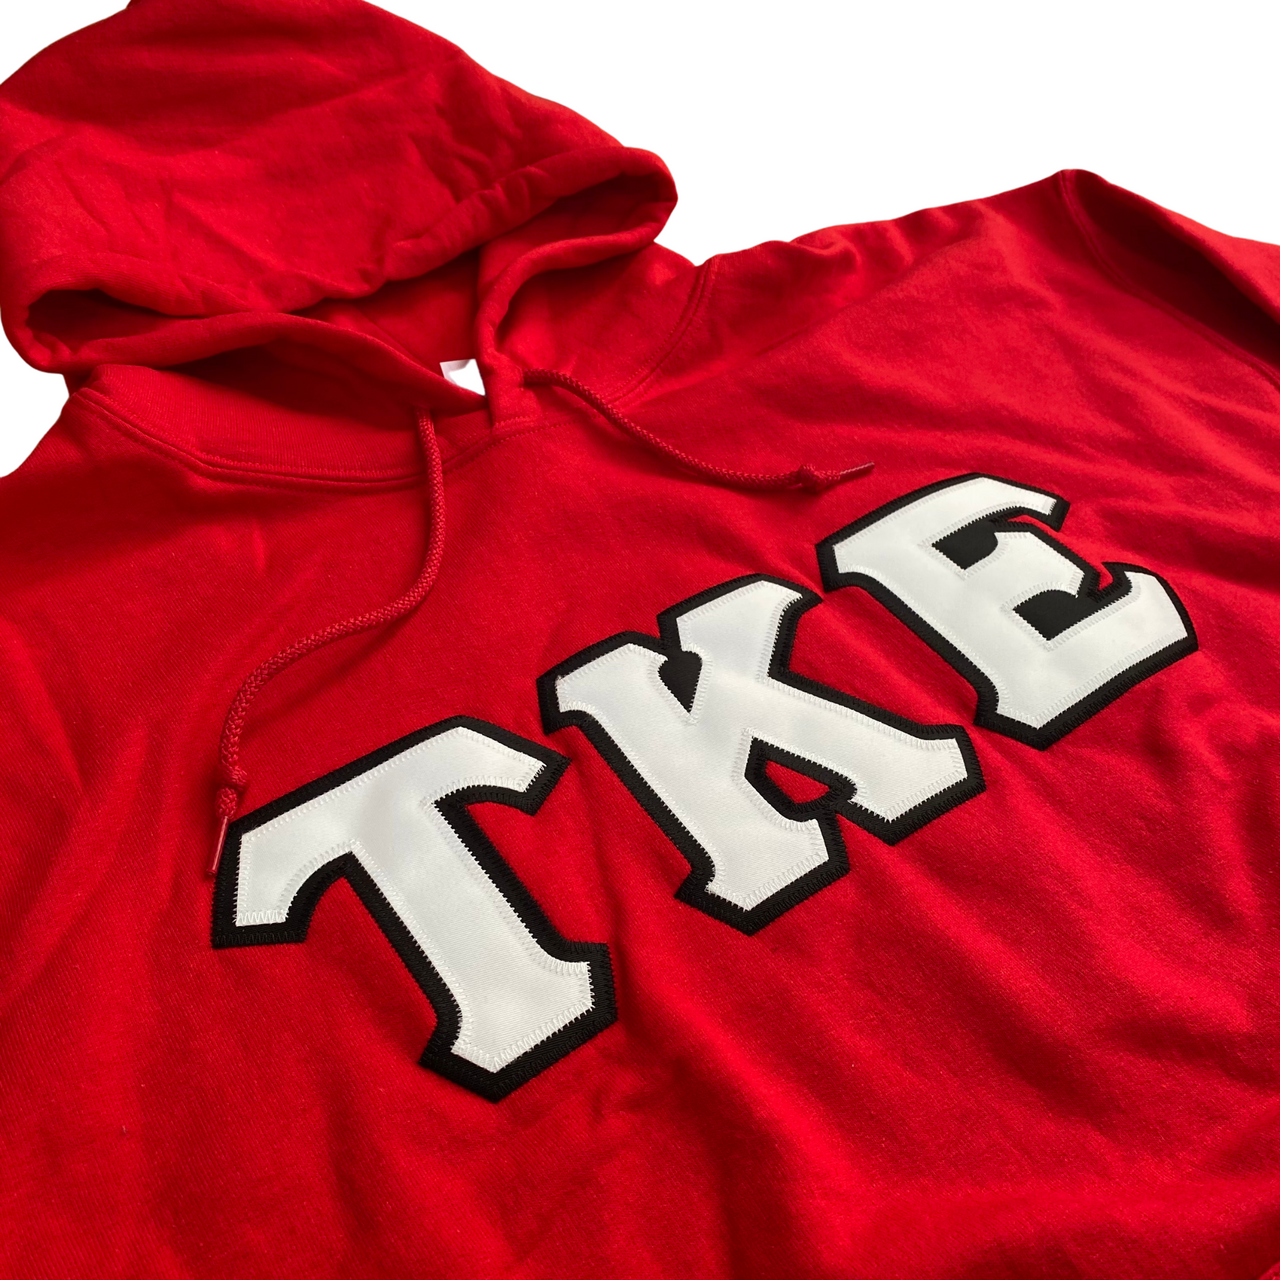 Tau Kappa Epsilon Stitched Letter Hoodie | Red | White with Black Border